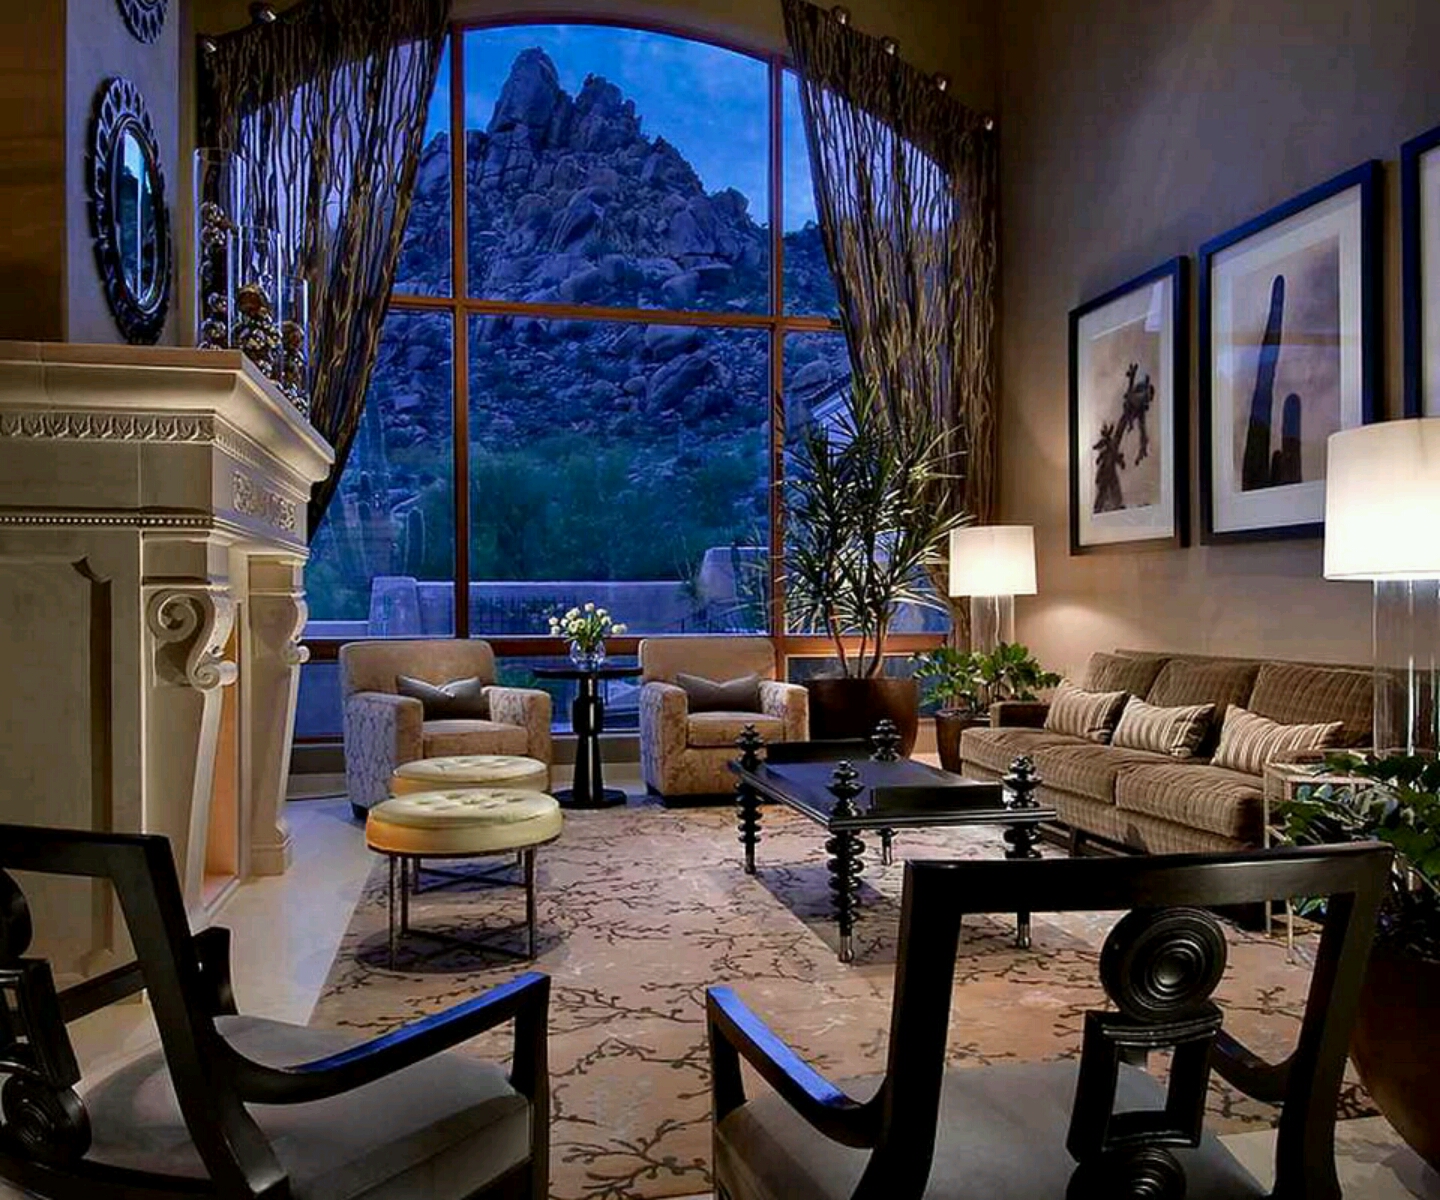 New home designs latest.: Luxury living rooms interior modern designs ideas.